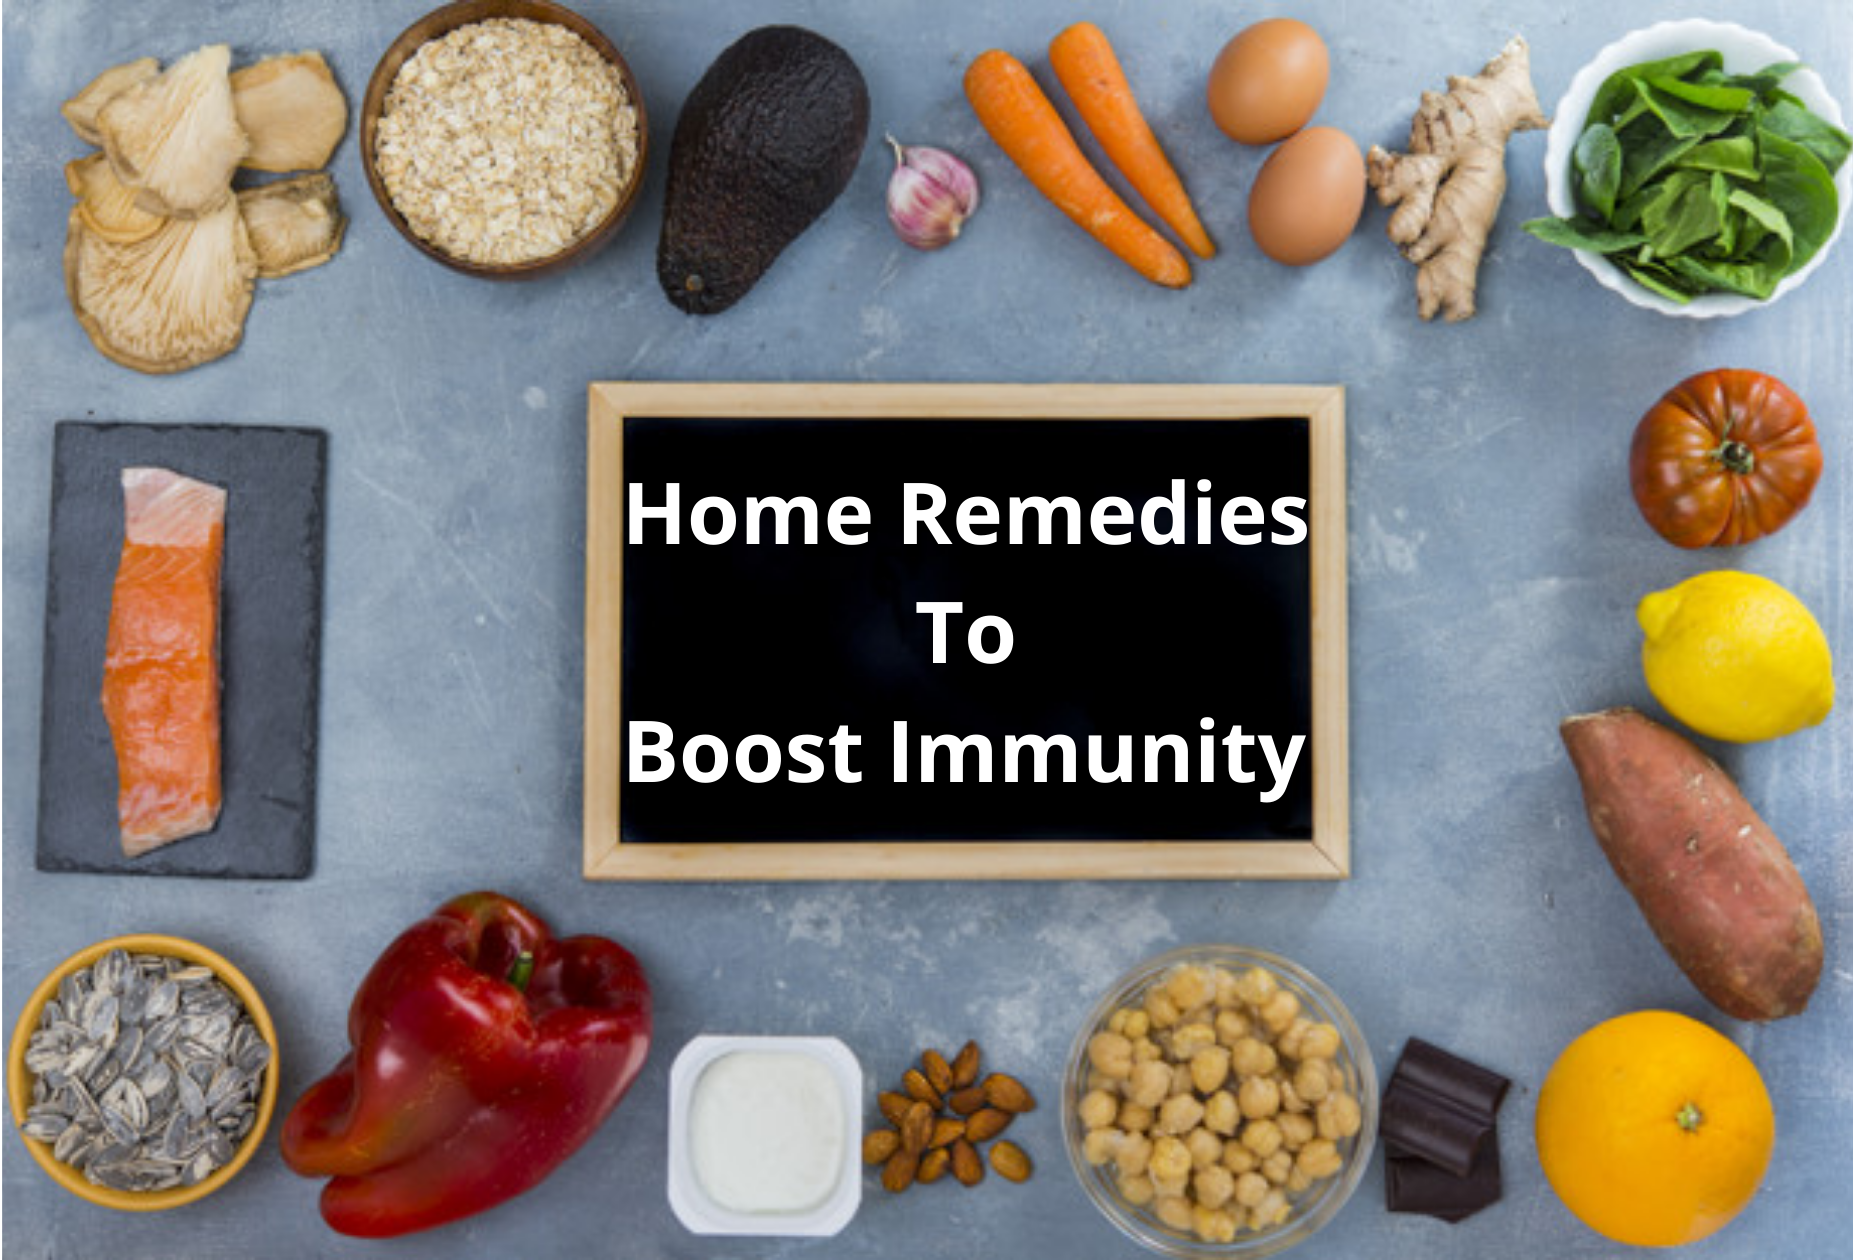 Immunity boosting remedies